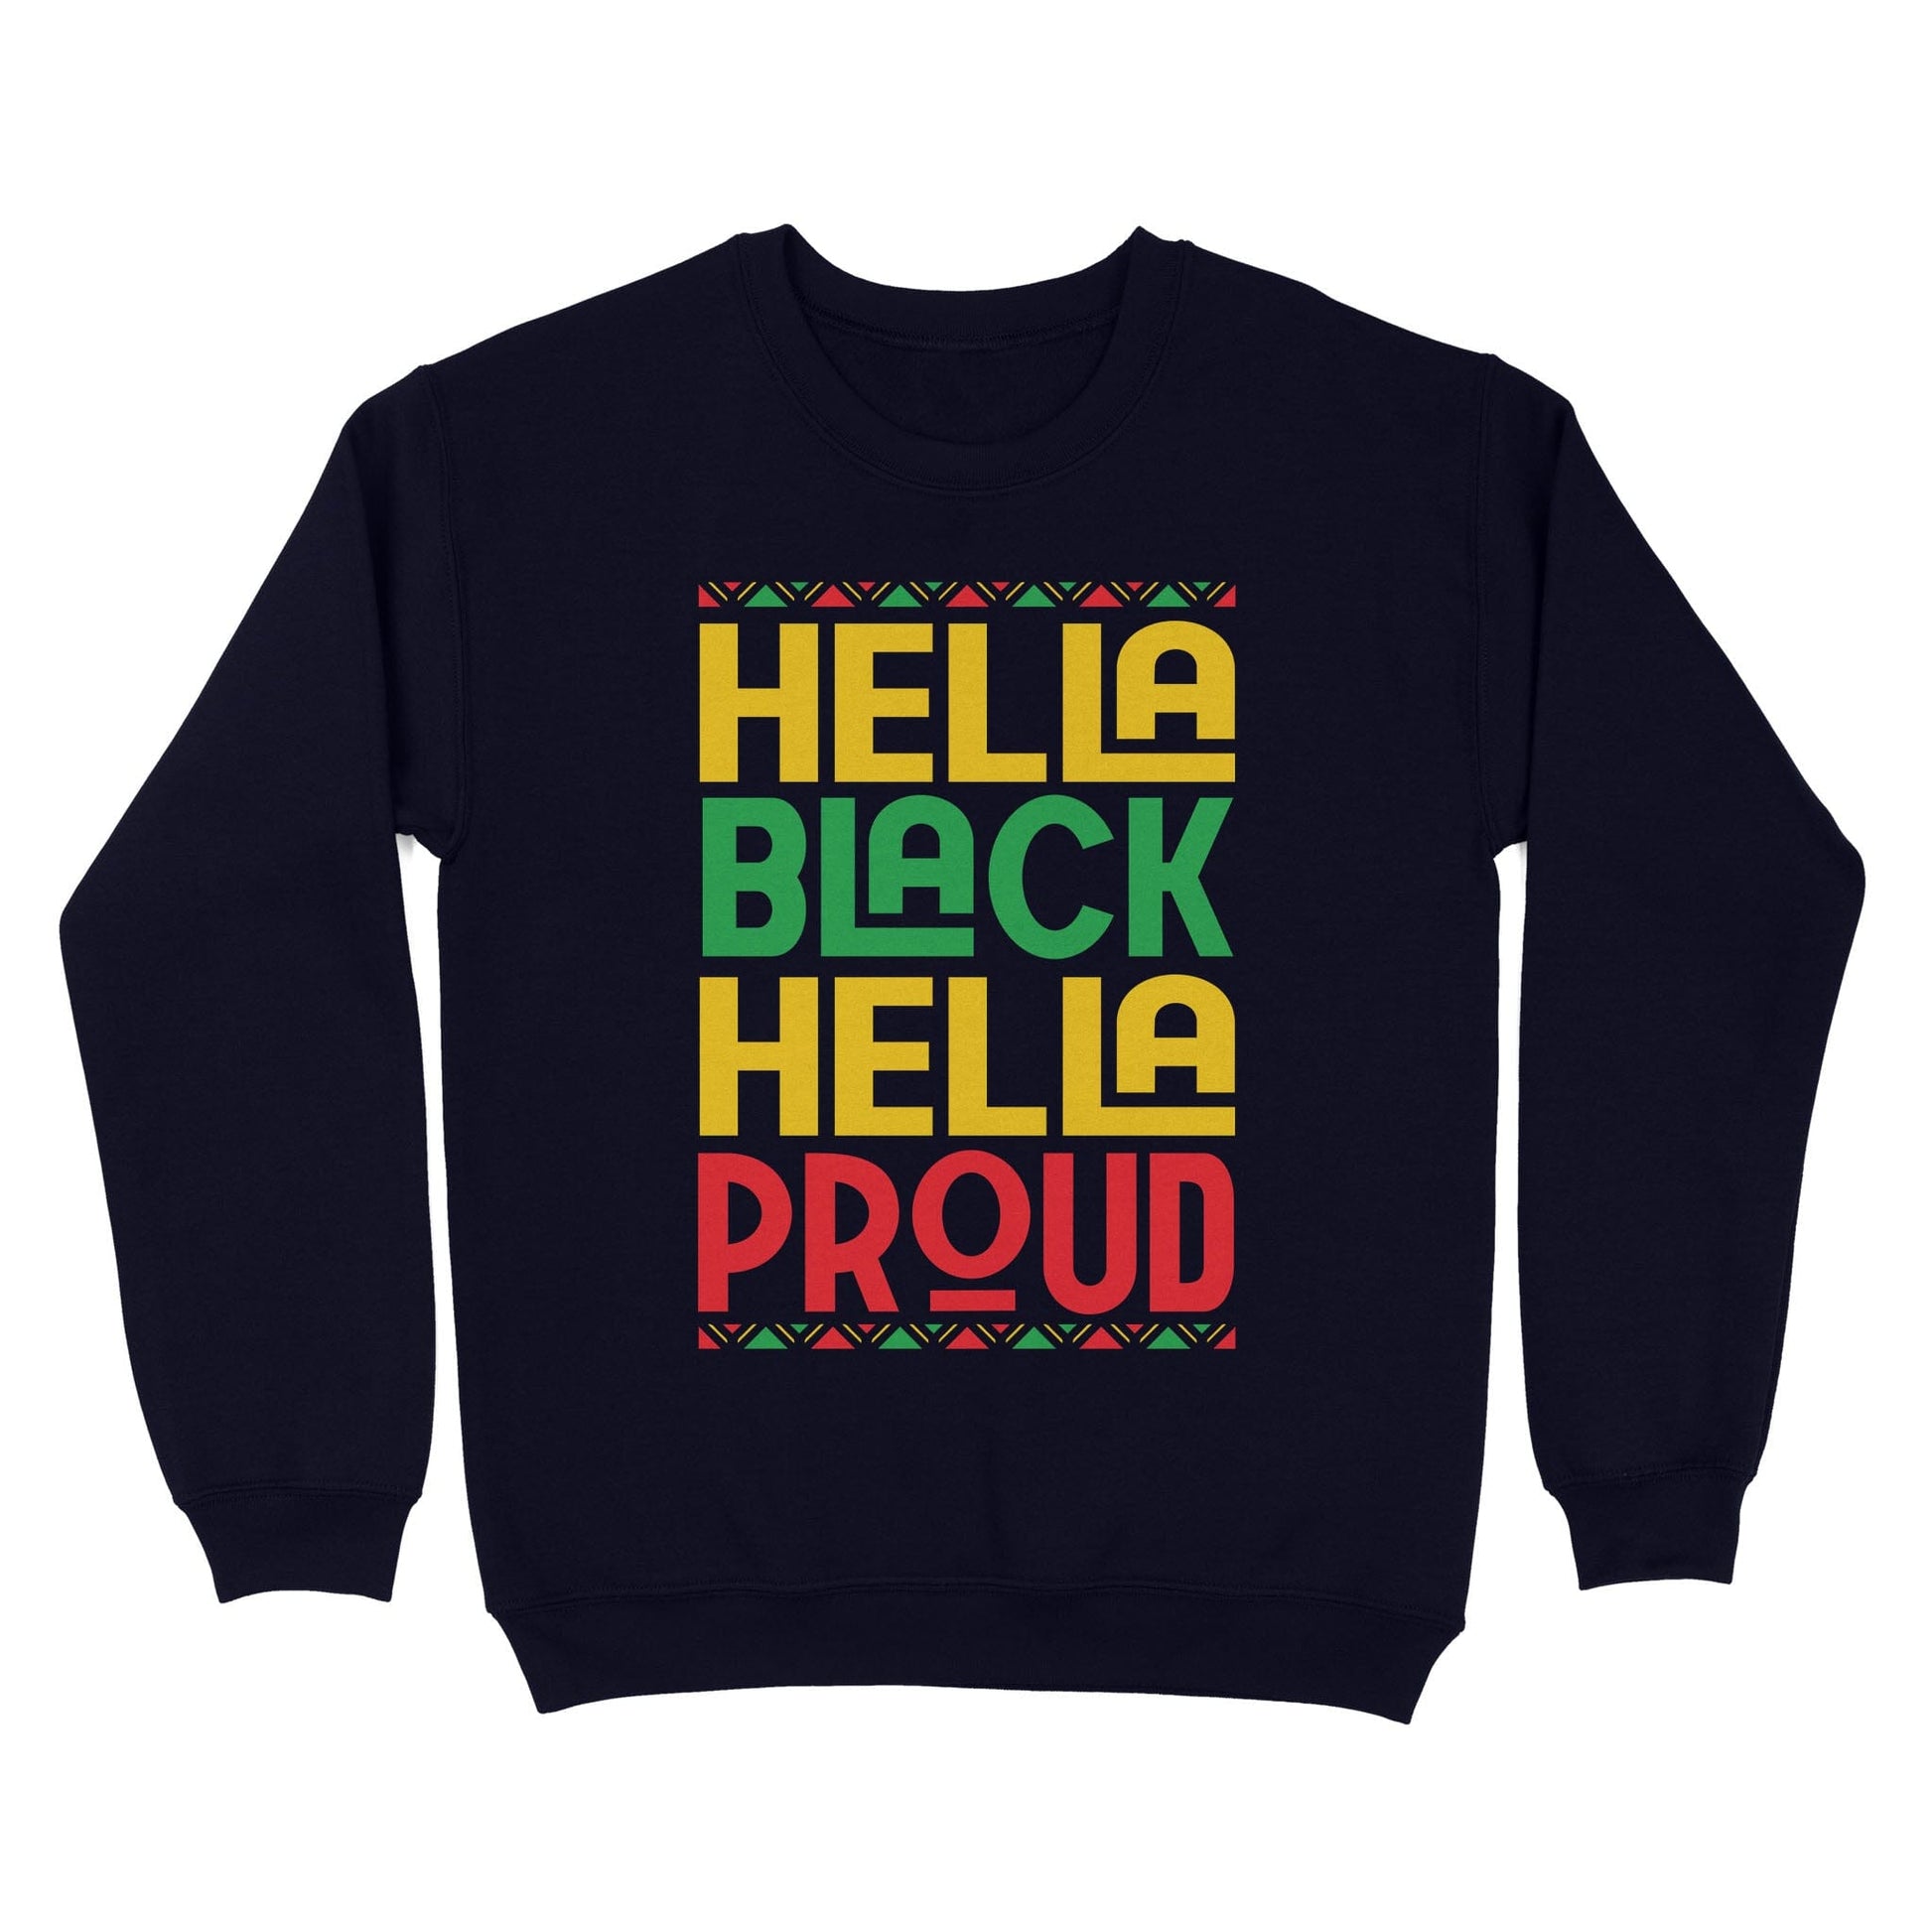 Hella Black Hella Proud Sweatshirt Apparel Gearment Navy S 